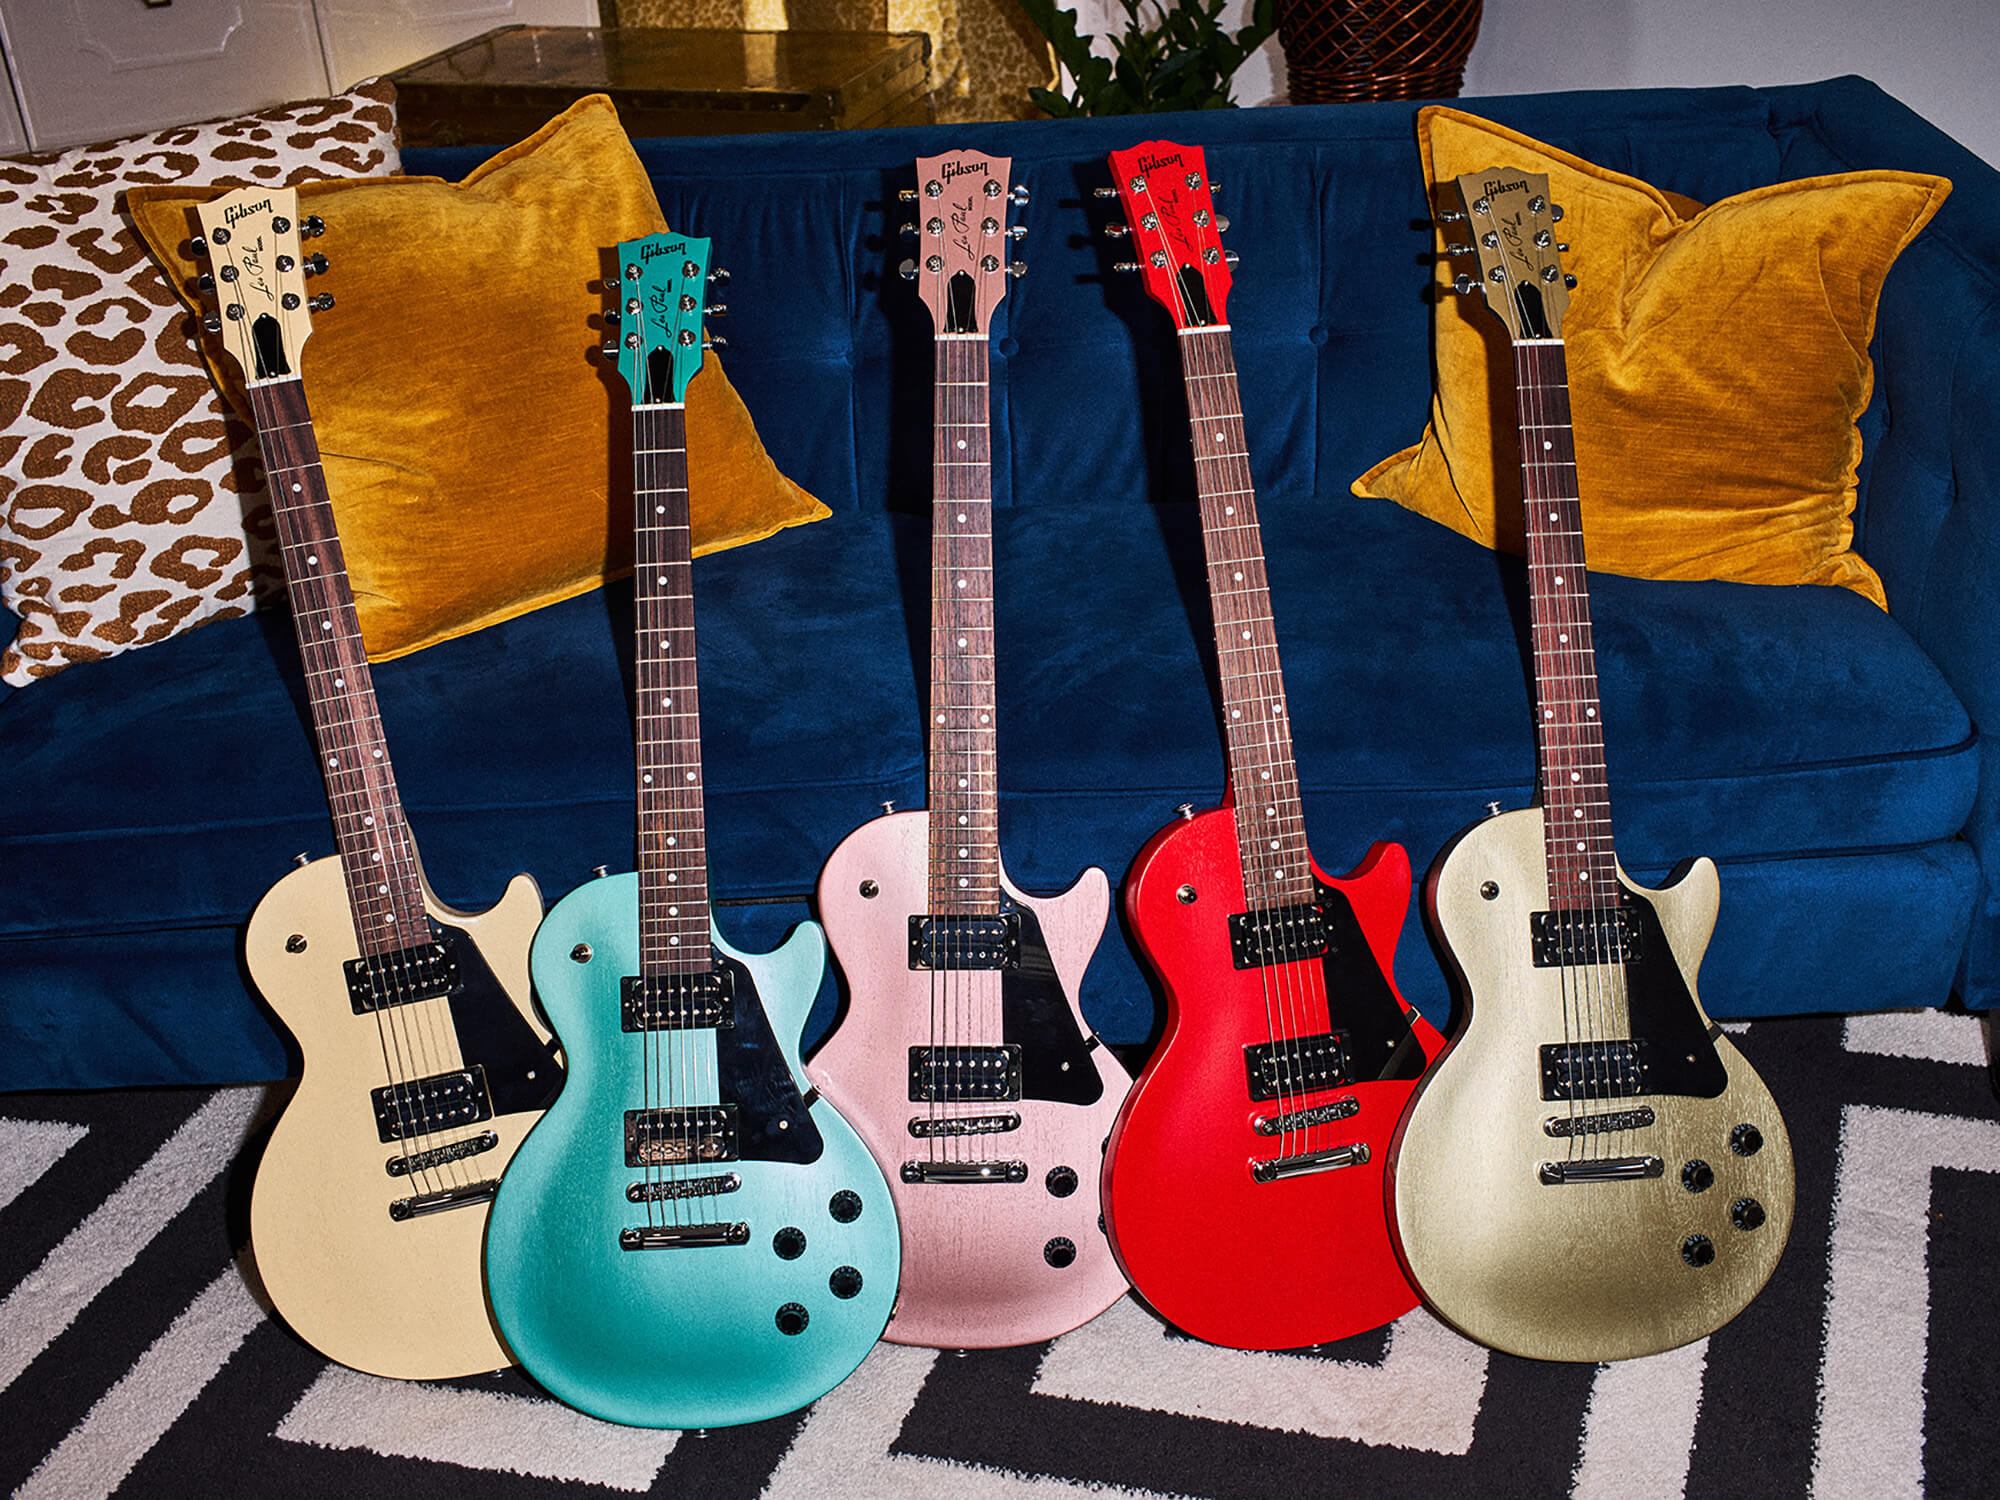 Gibson Les Paul Modern Lite guitars in various colourways